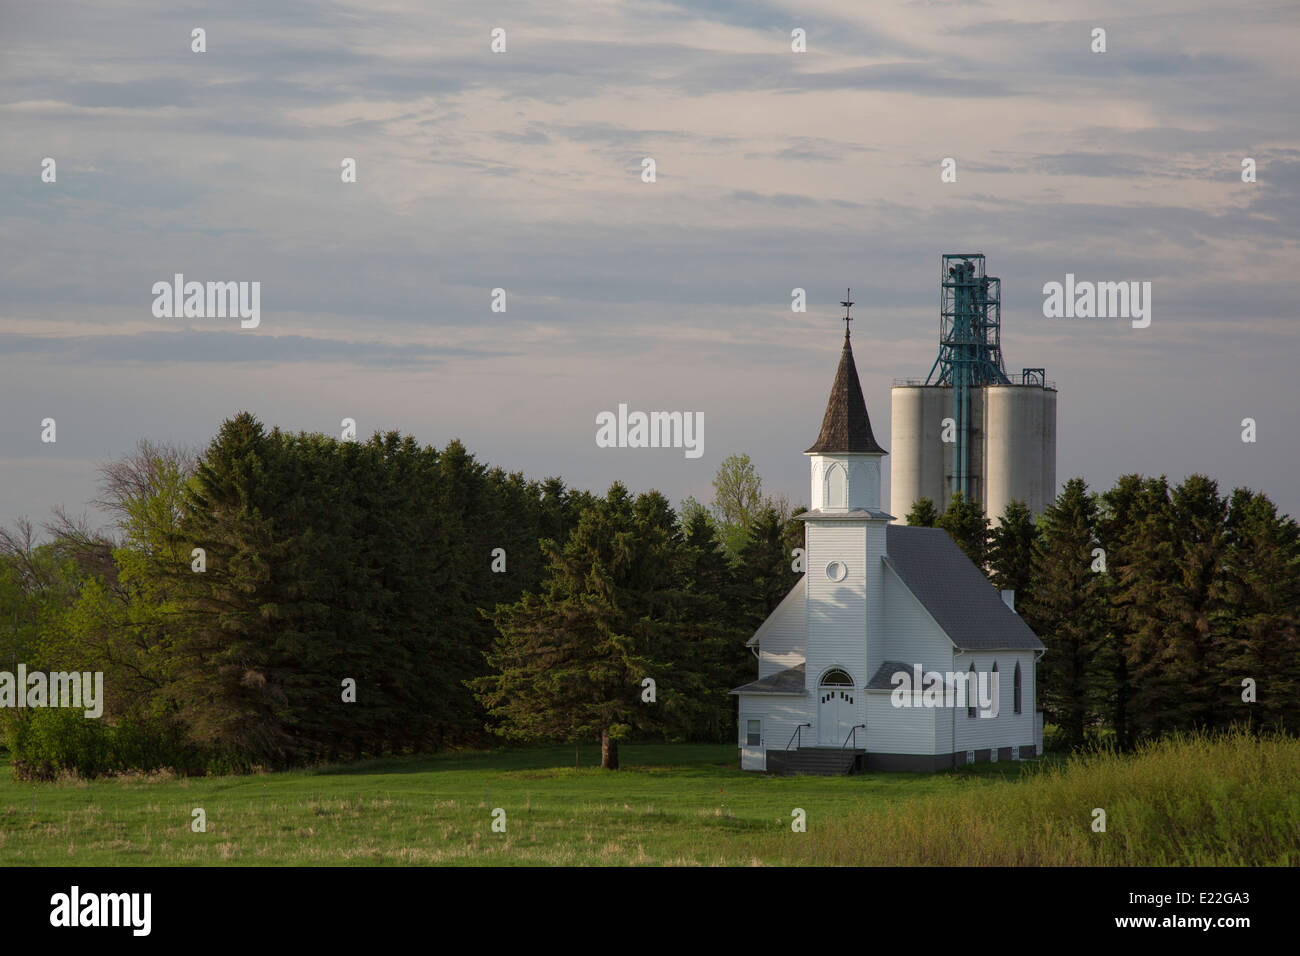 Maddock, North Dakota - A rural church and a grain elevator. Stock Photo